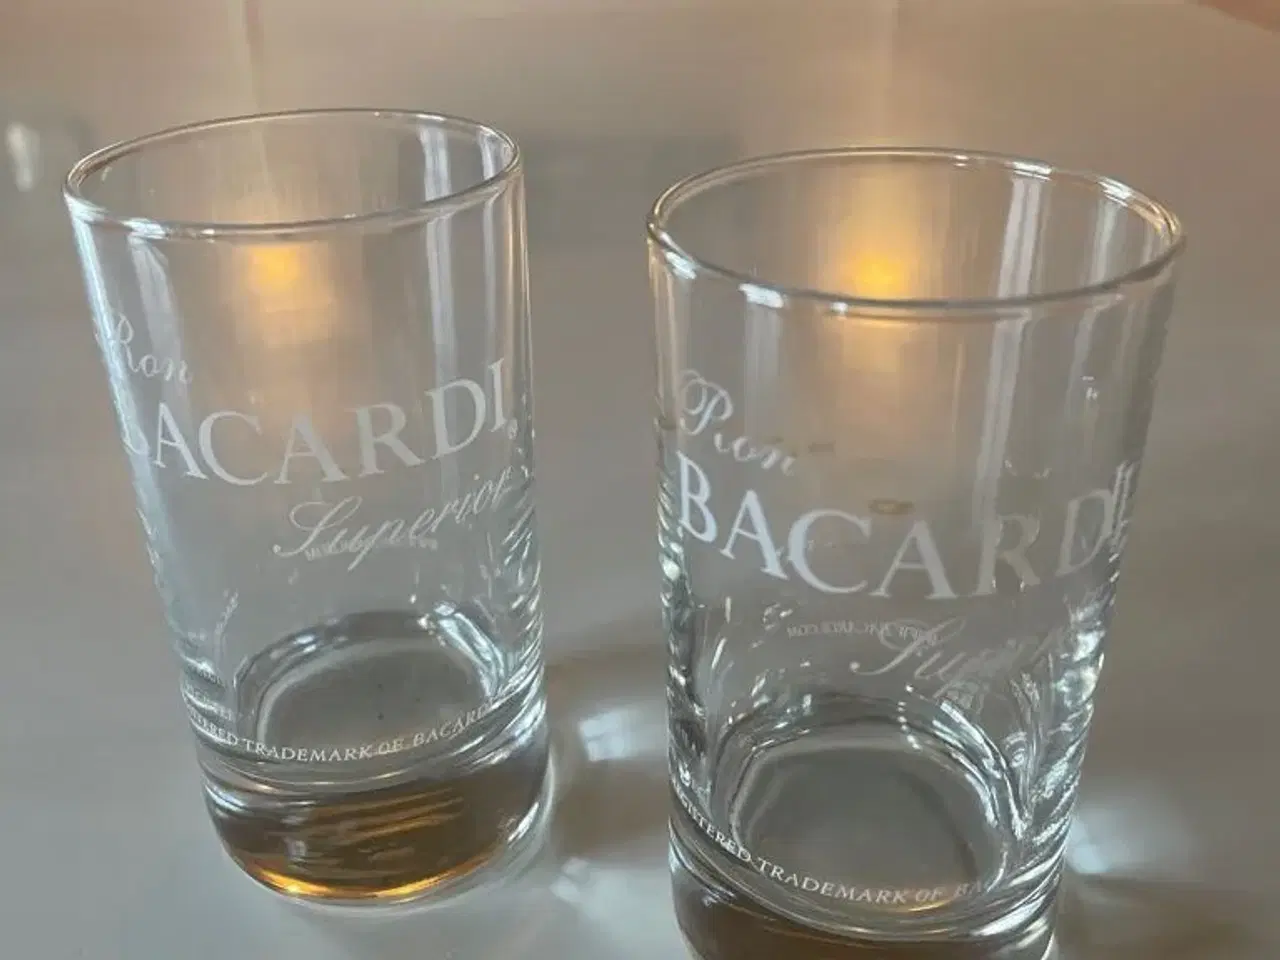 Billede 1 - Bacardi sjus glas.